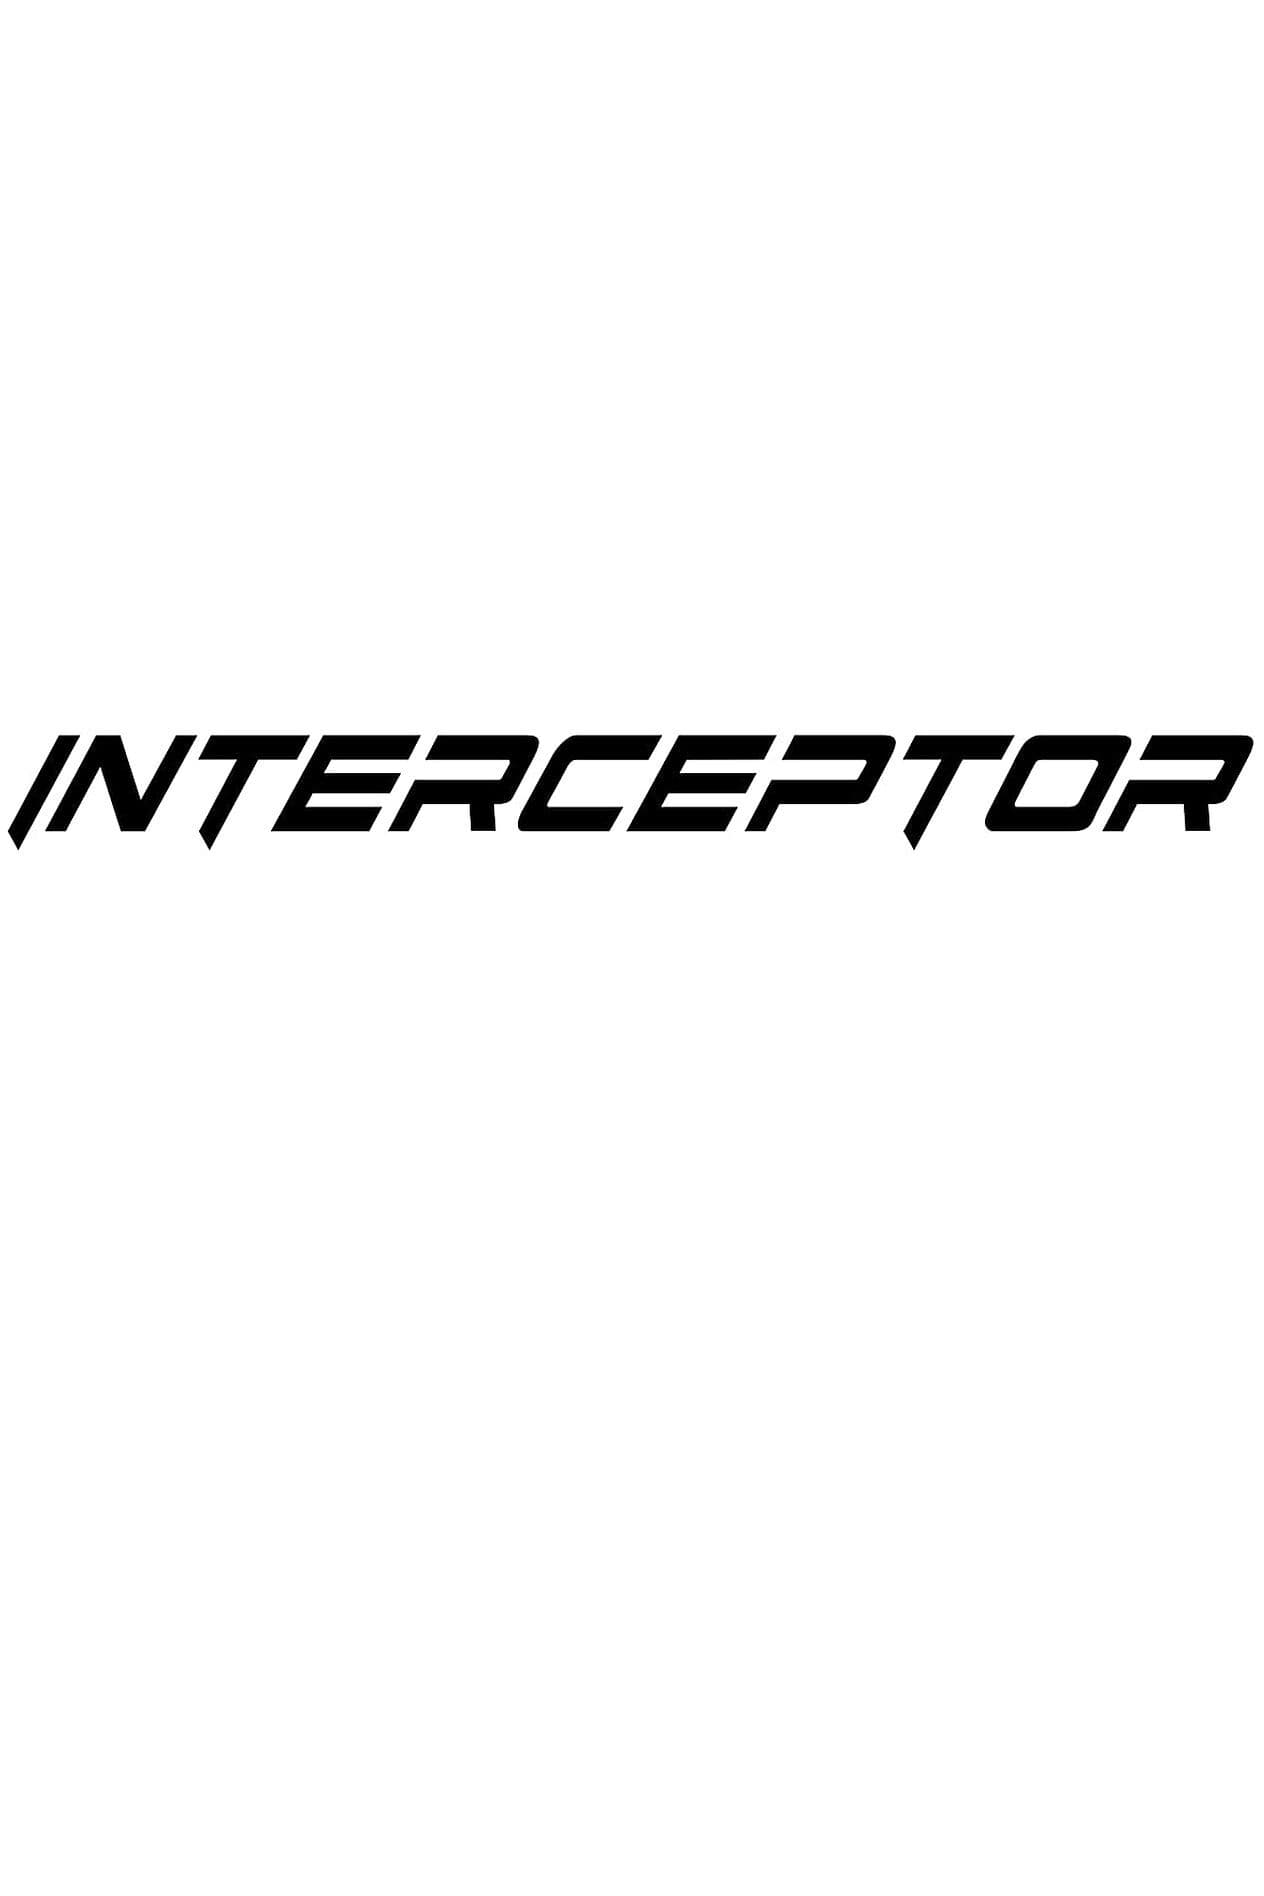 Interceptor Picture